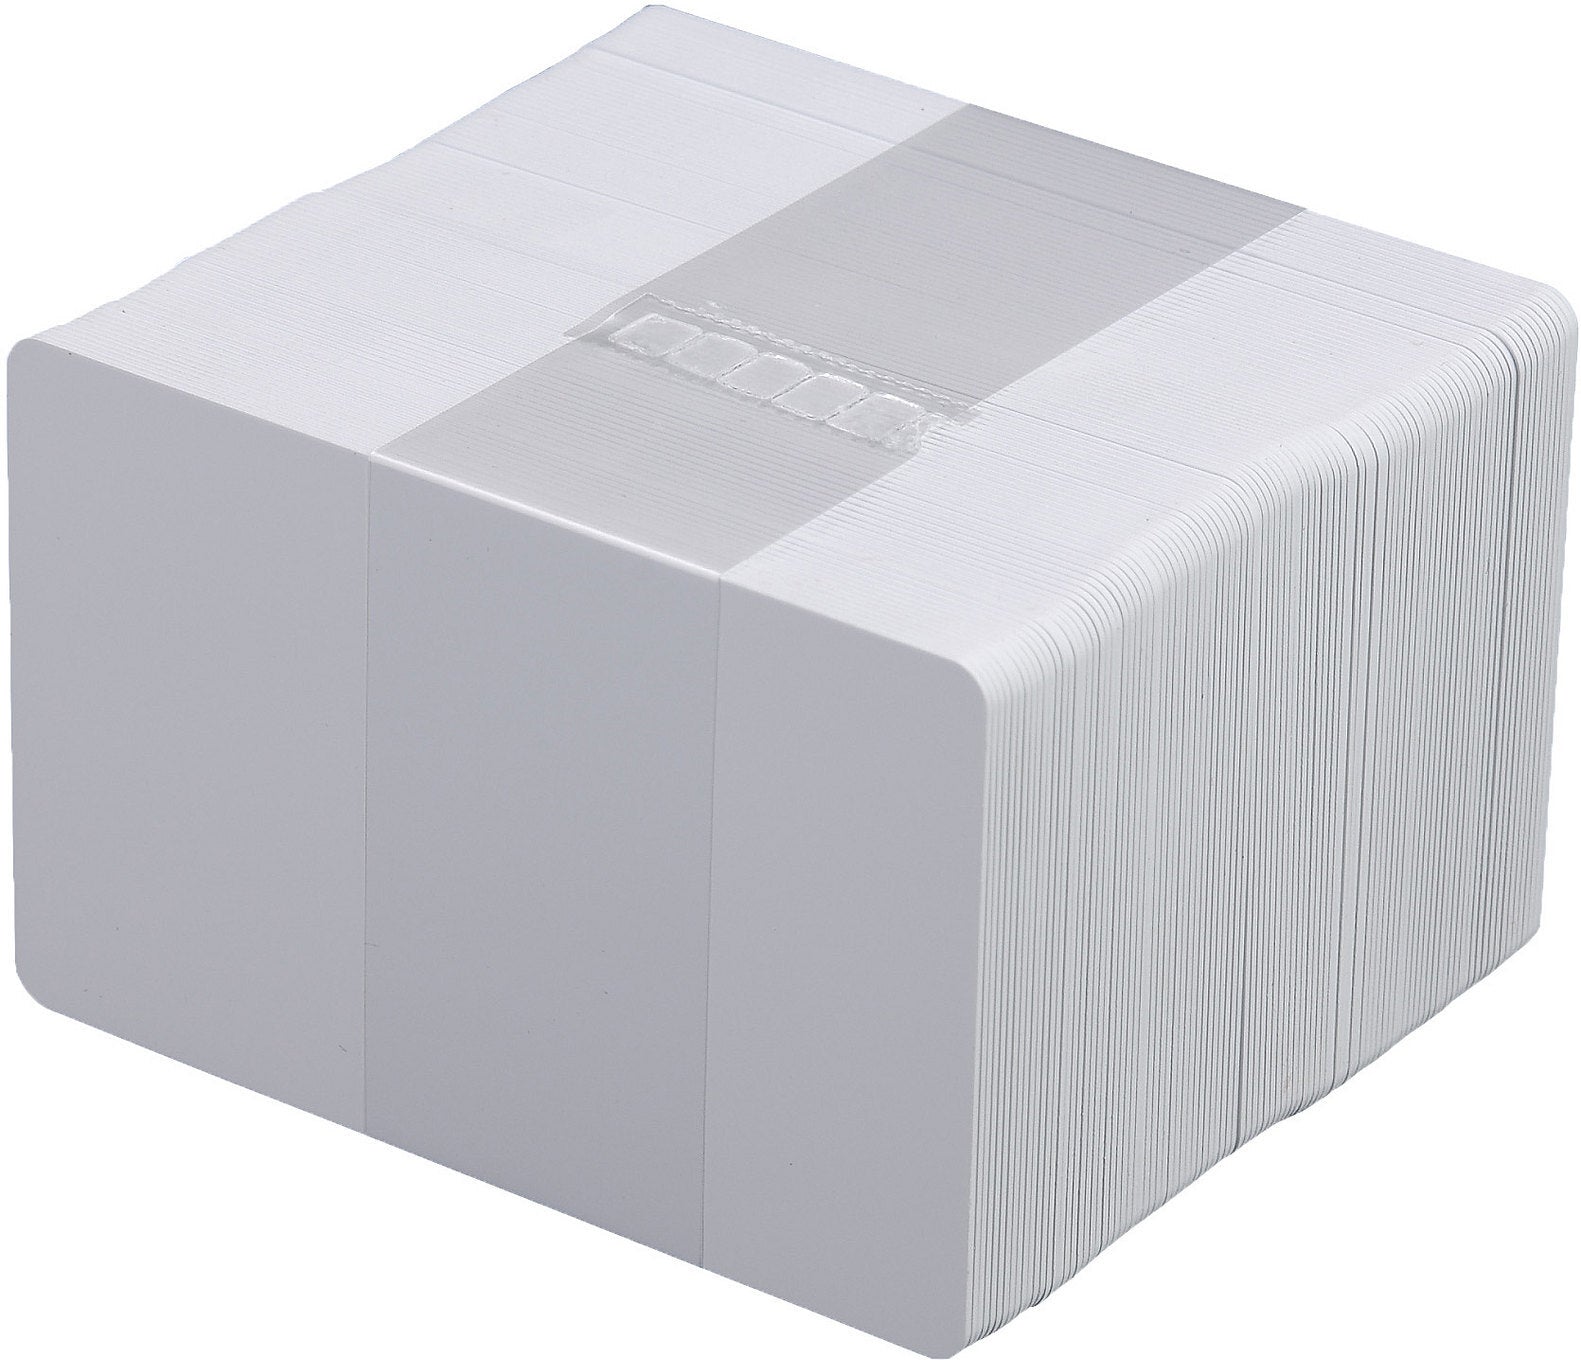 Blank White PVC Plastic ID Cards 760 micron | SPLIT PACKS - 250